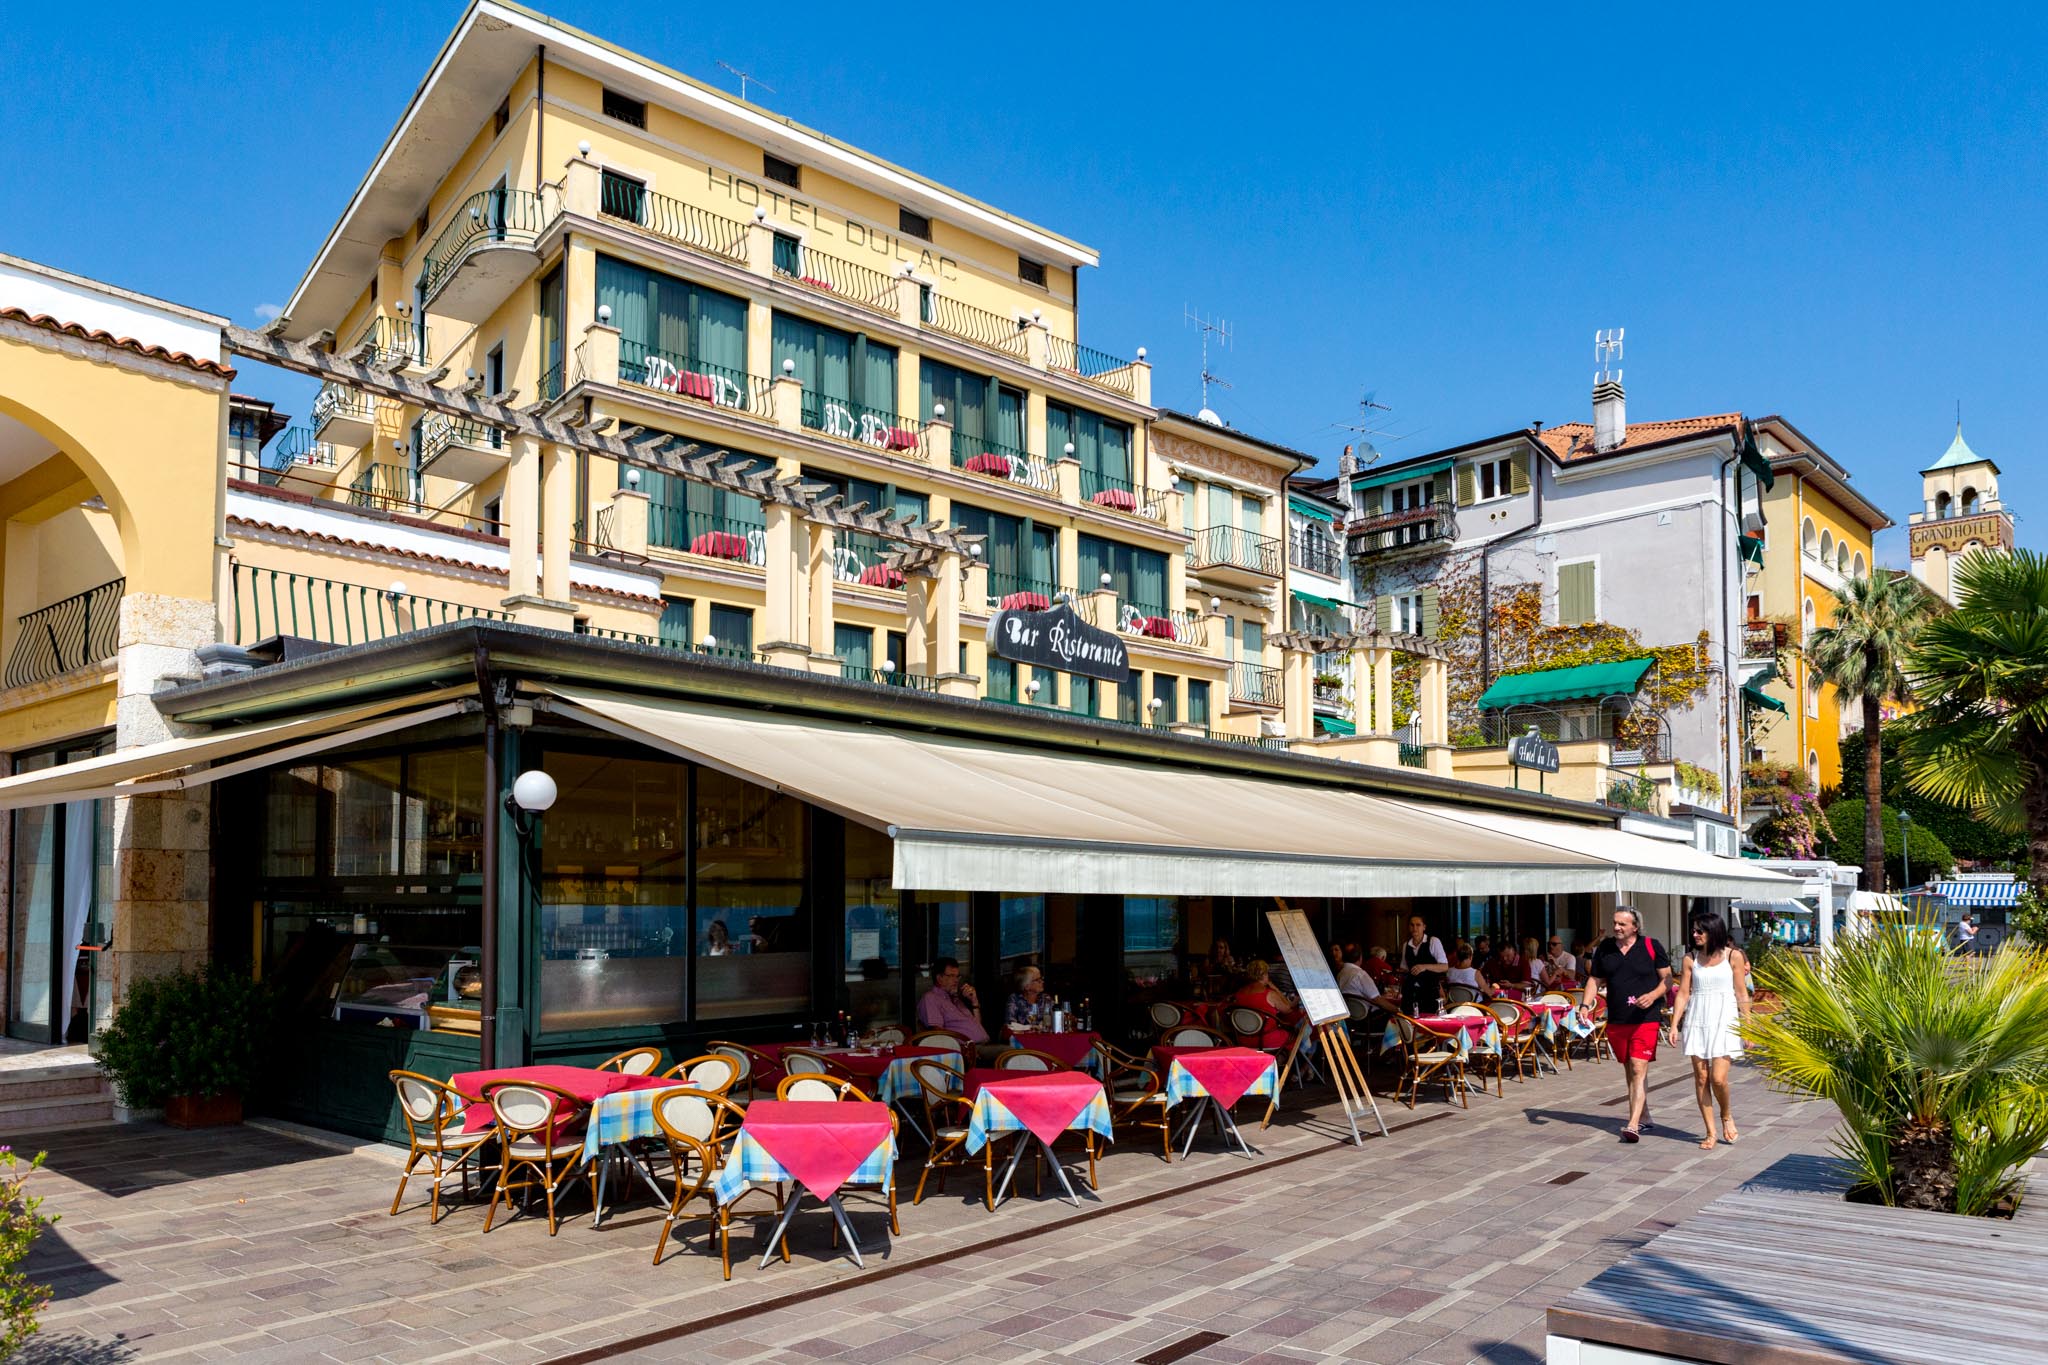 Elegant eateries in Gardone Riviera